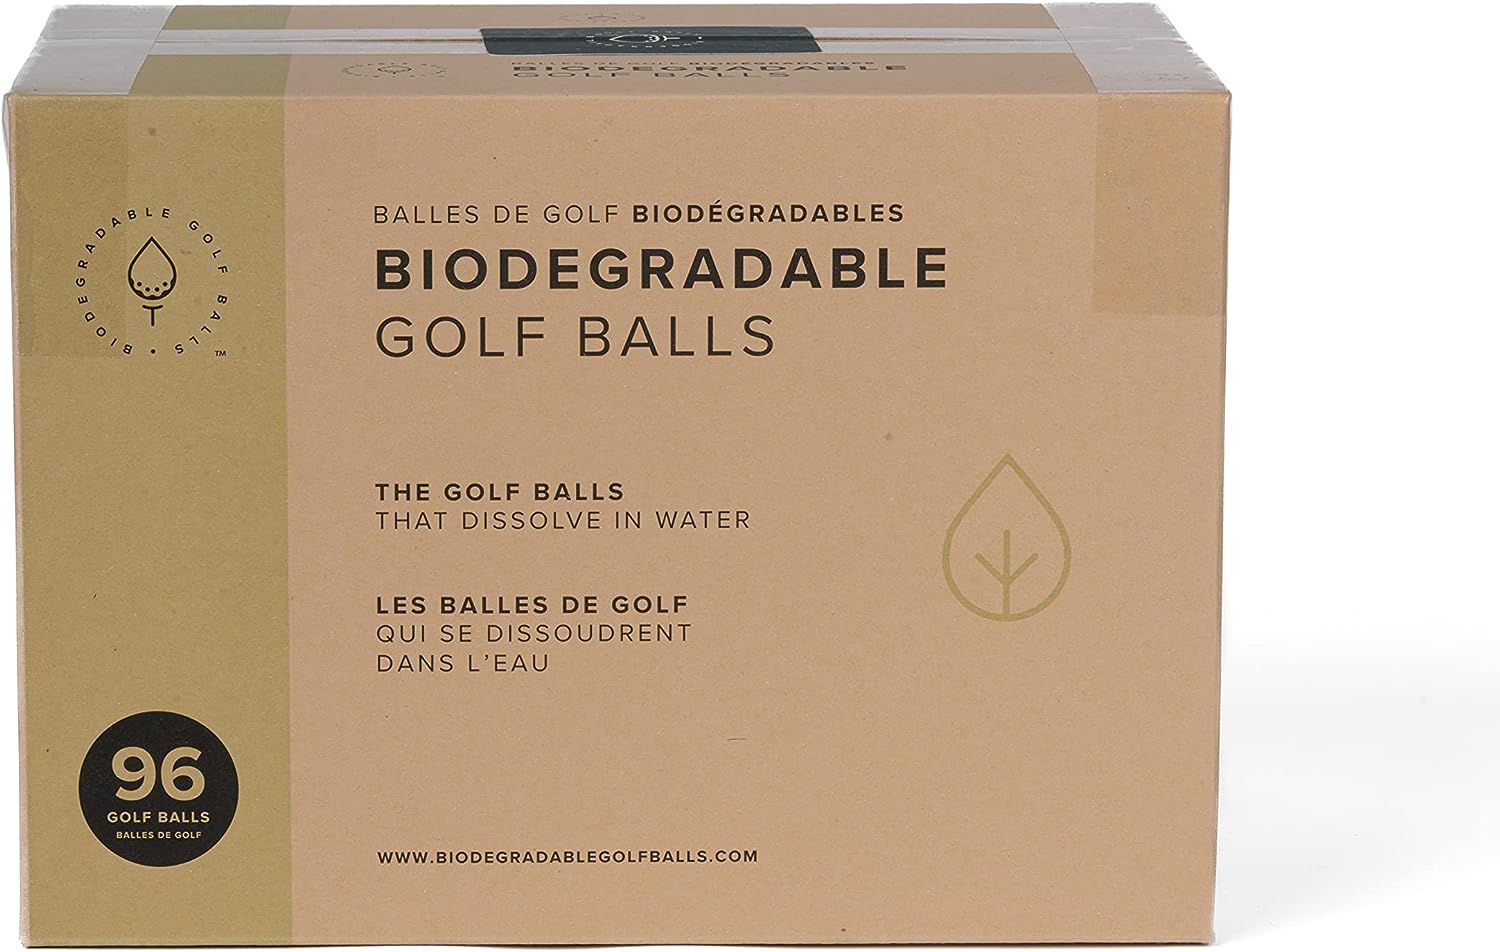 Biodegradable Golf Balls review